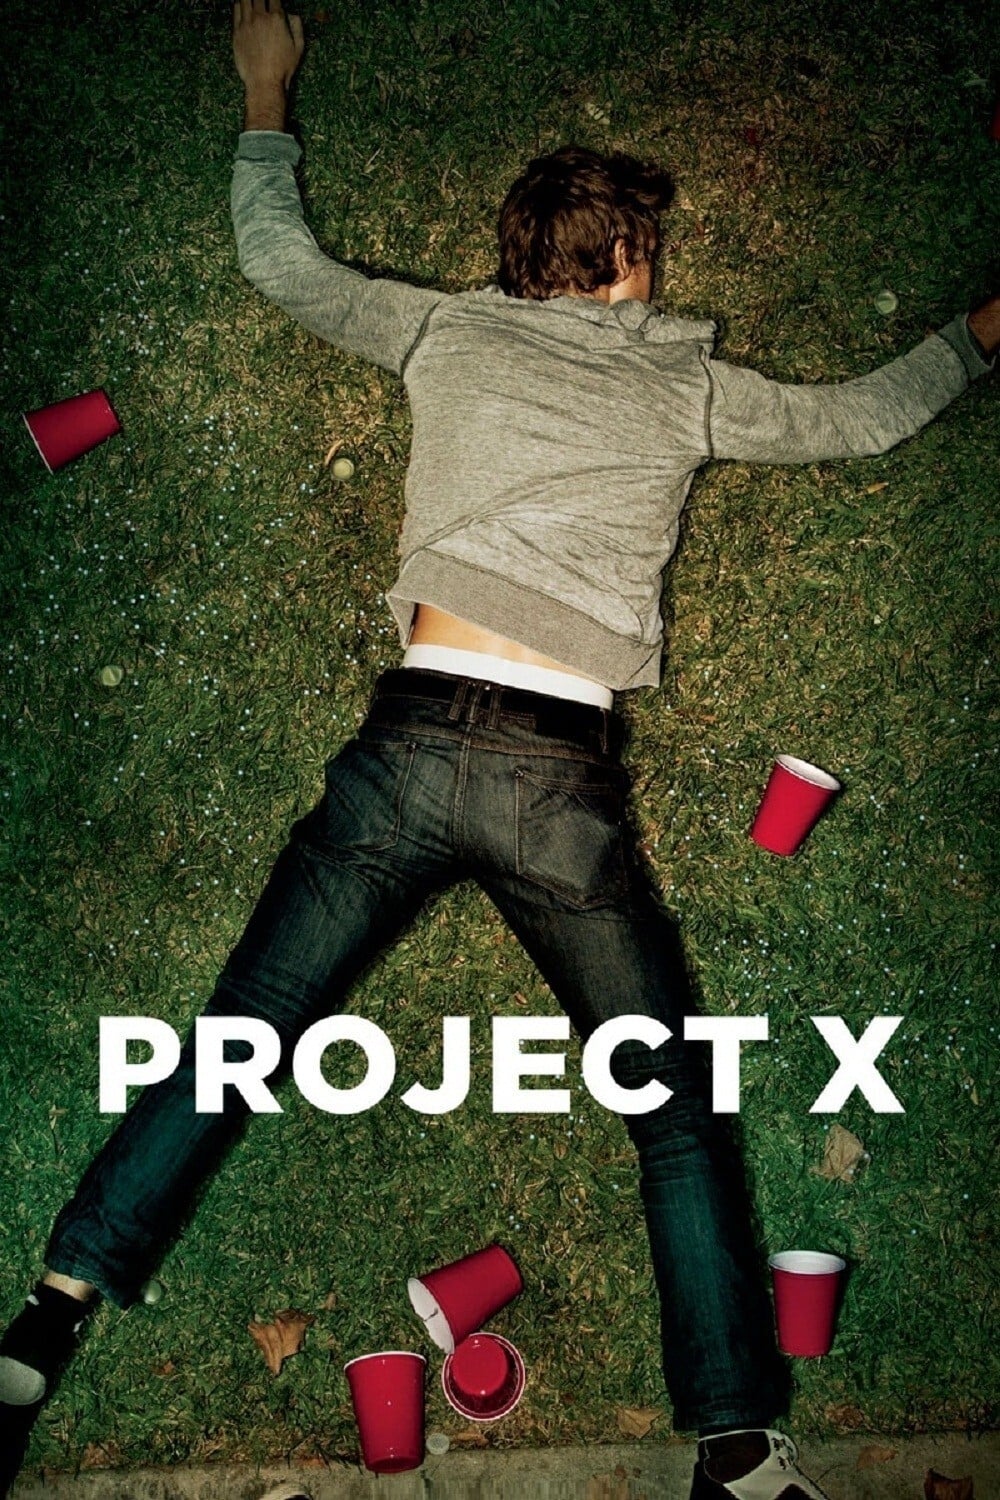 Projet X (2012)